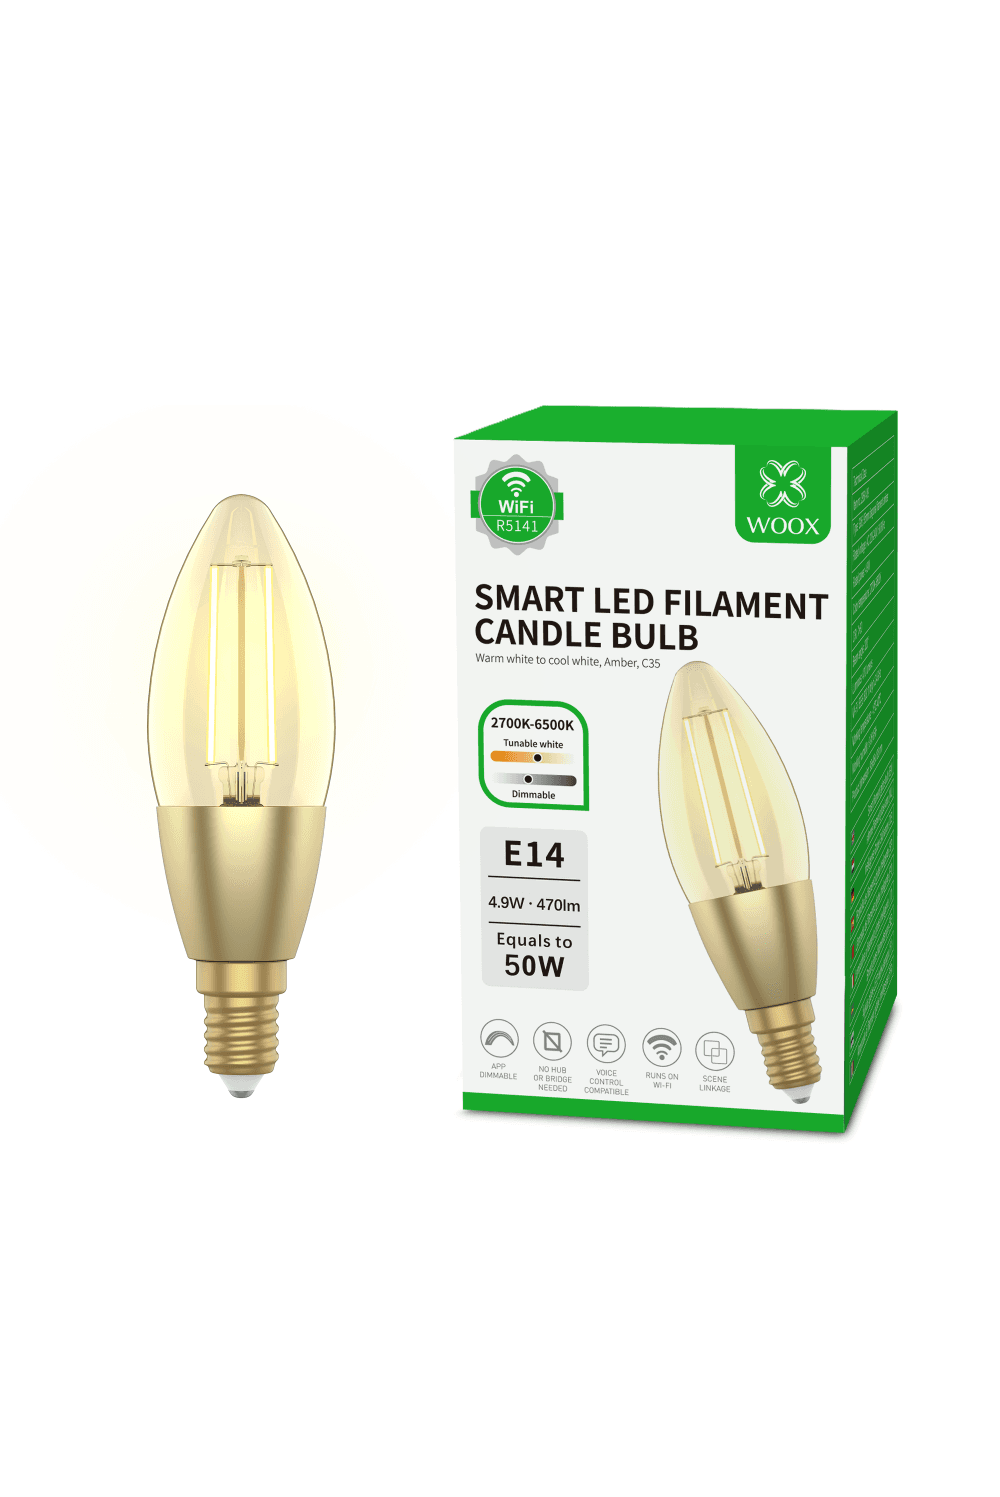 Woox R5141 Slimme filament E14 lamp